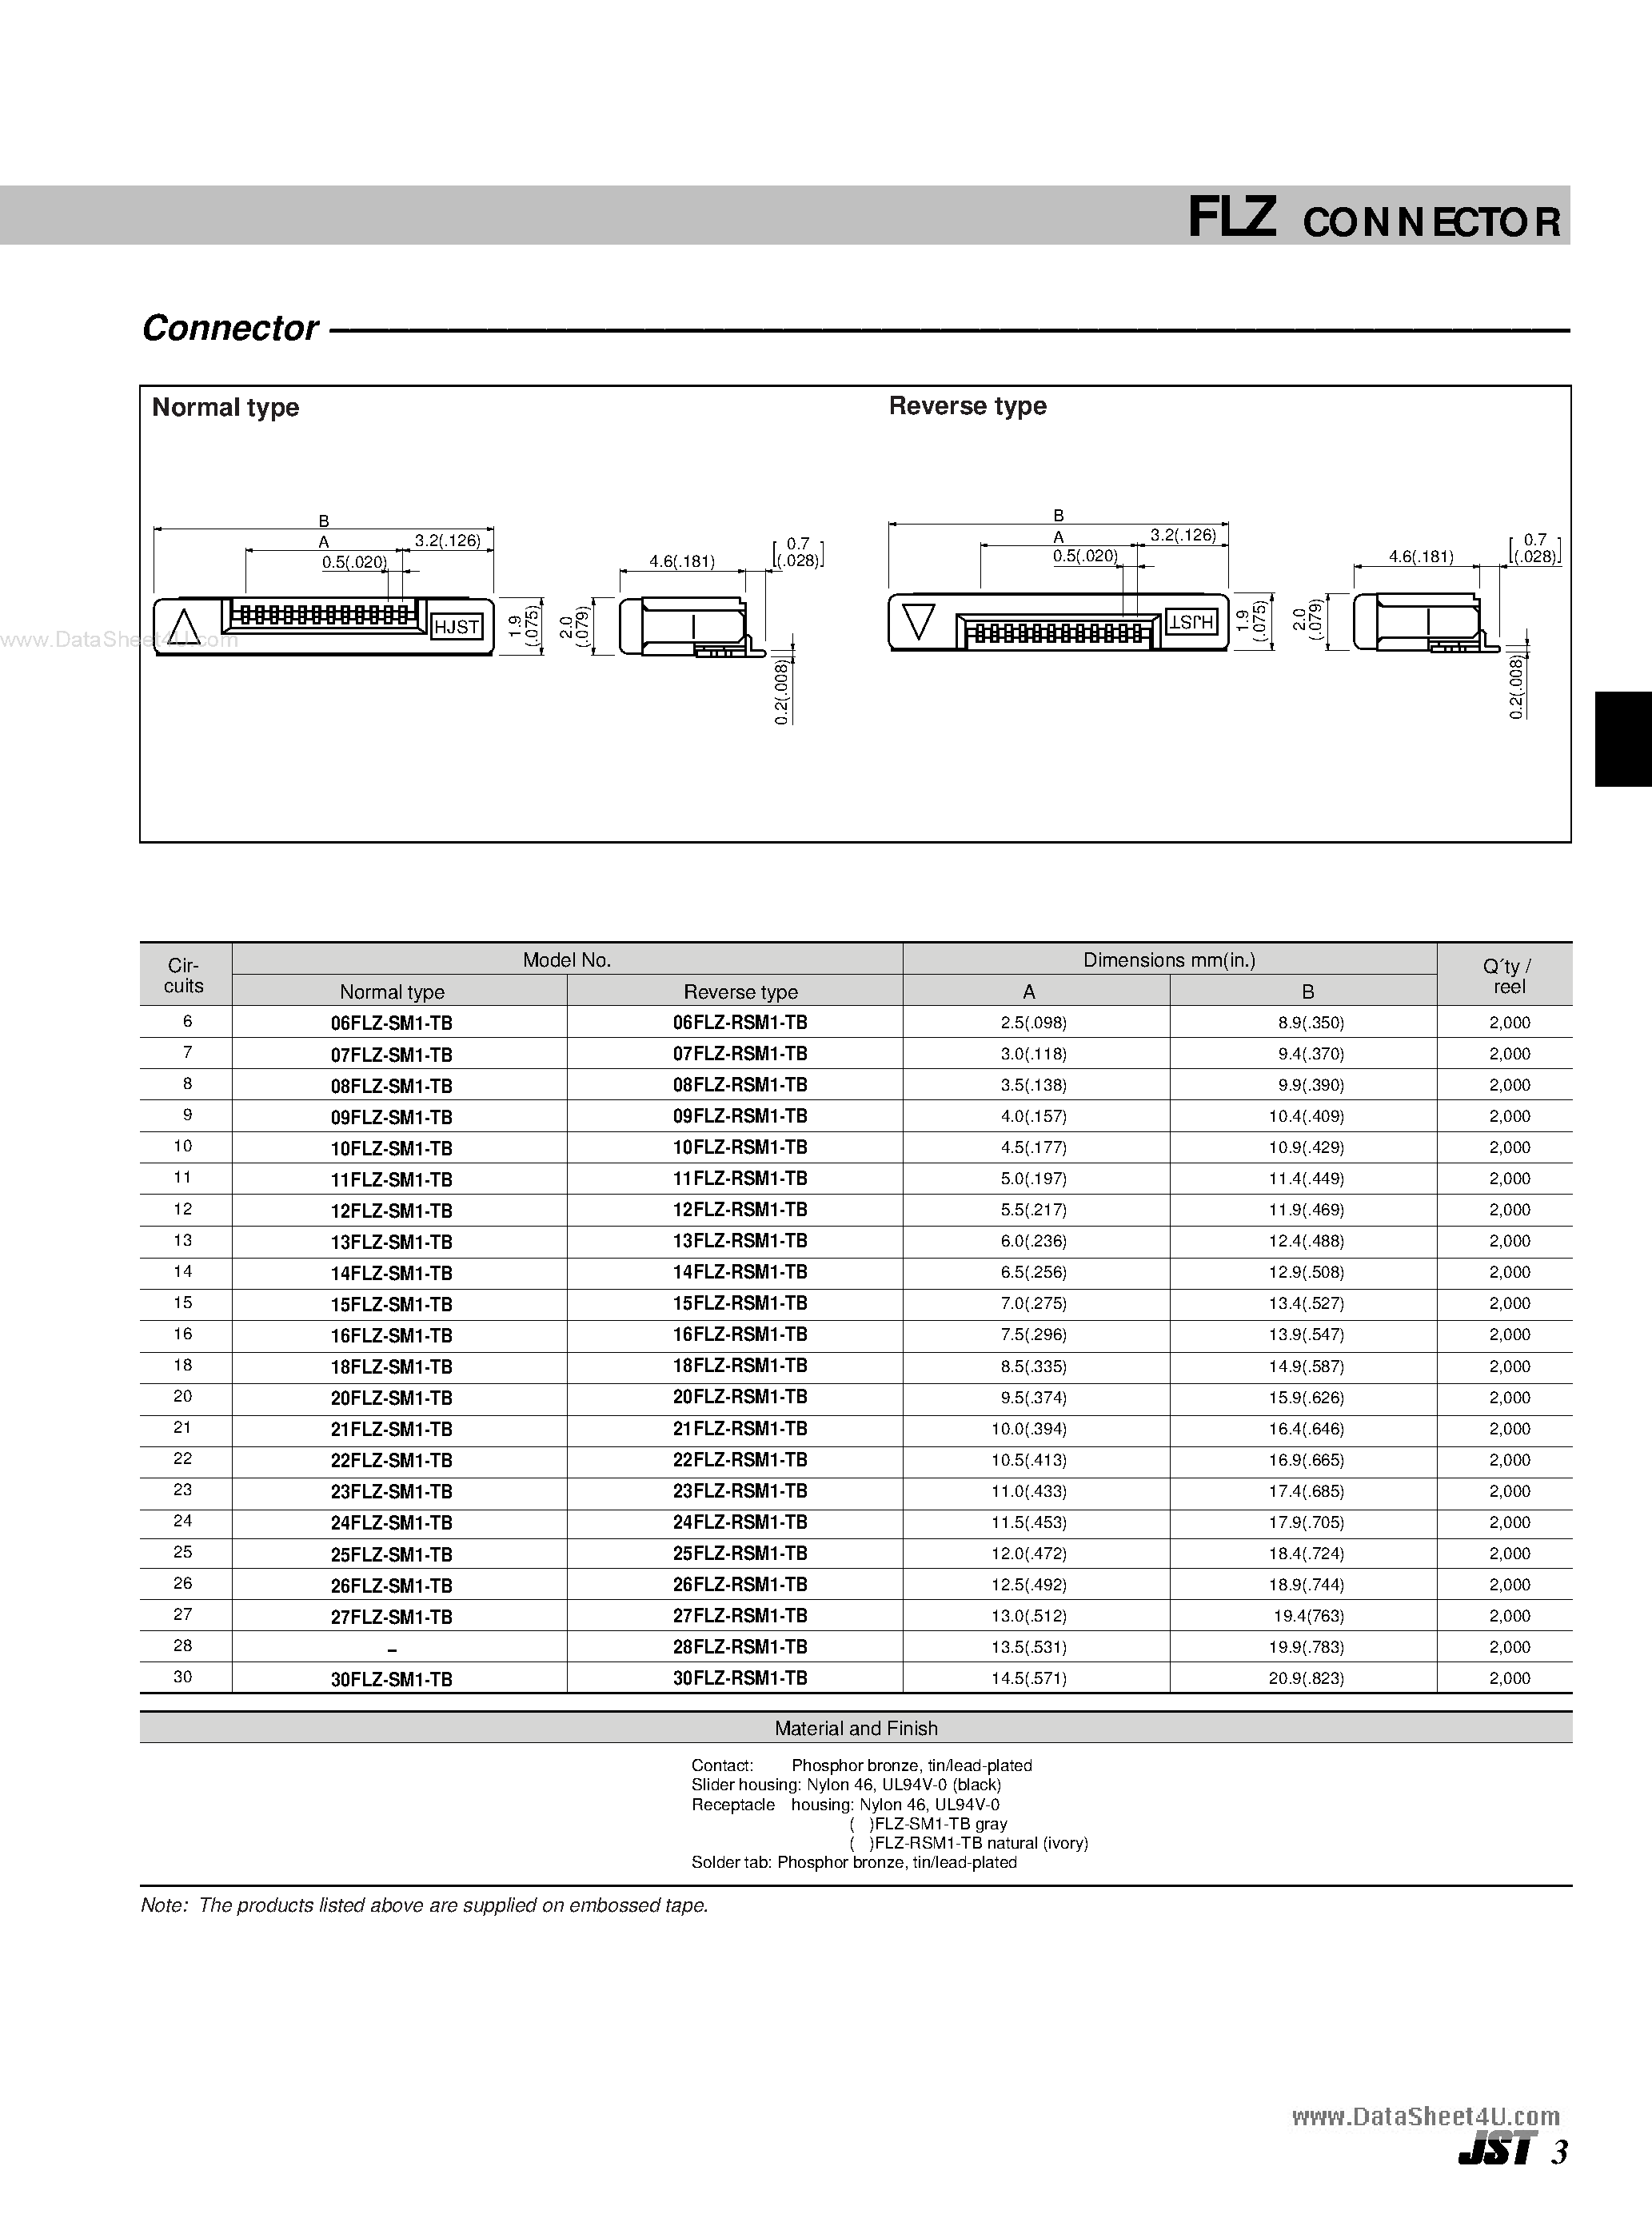 Datasheet 40FLZ-RSM1-R-TB - Connector page 2